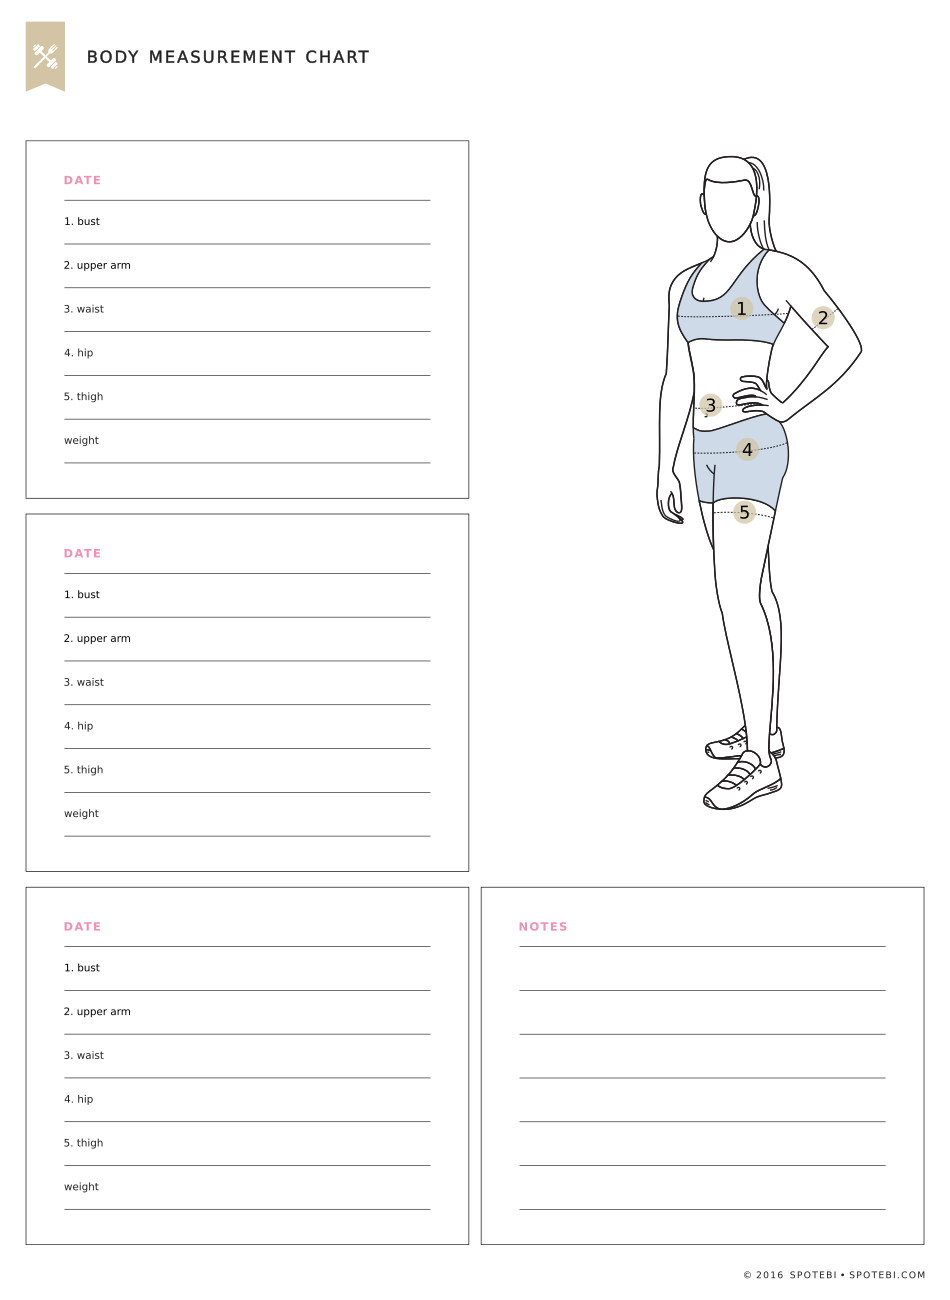 Body Measurement Chart | Fitness Tracker